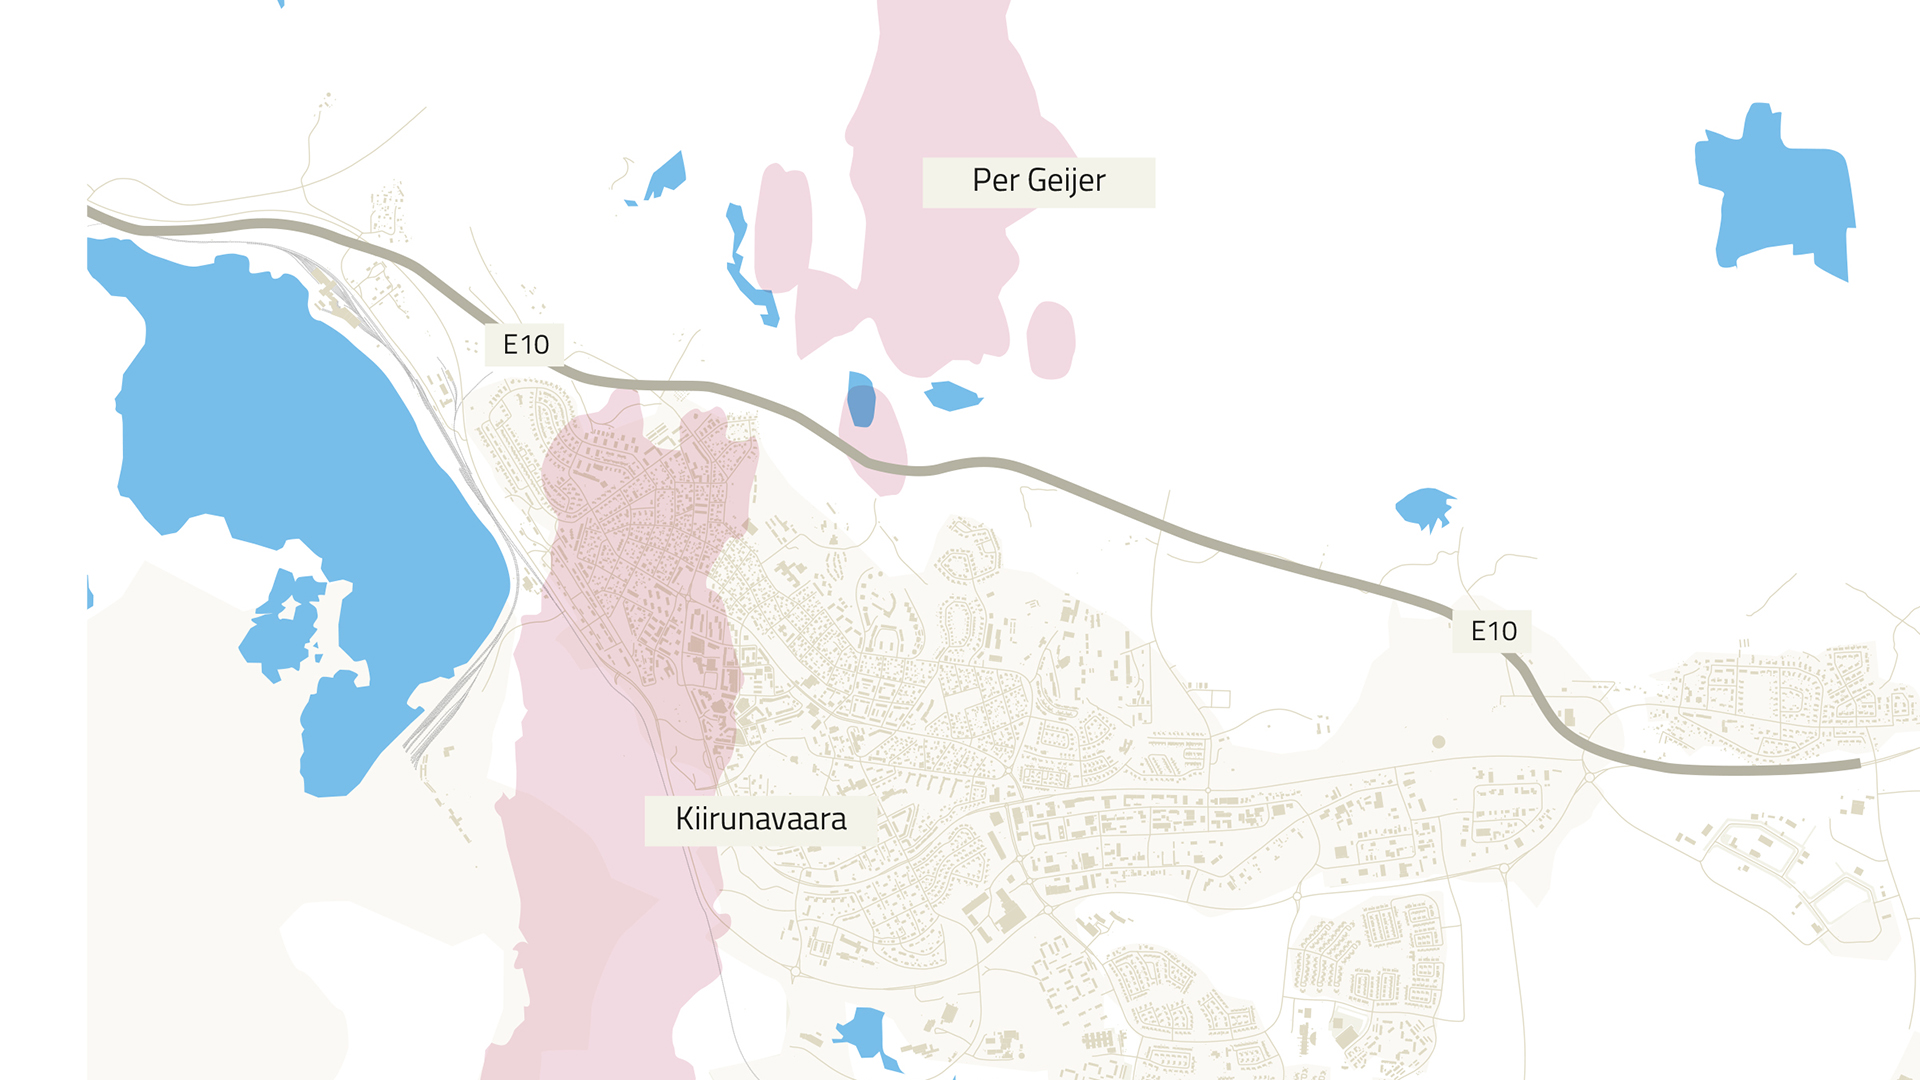 Map of Kiruna with the ore body Per Geijer. 